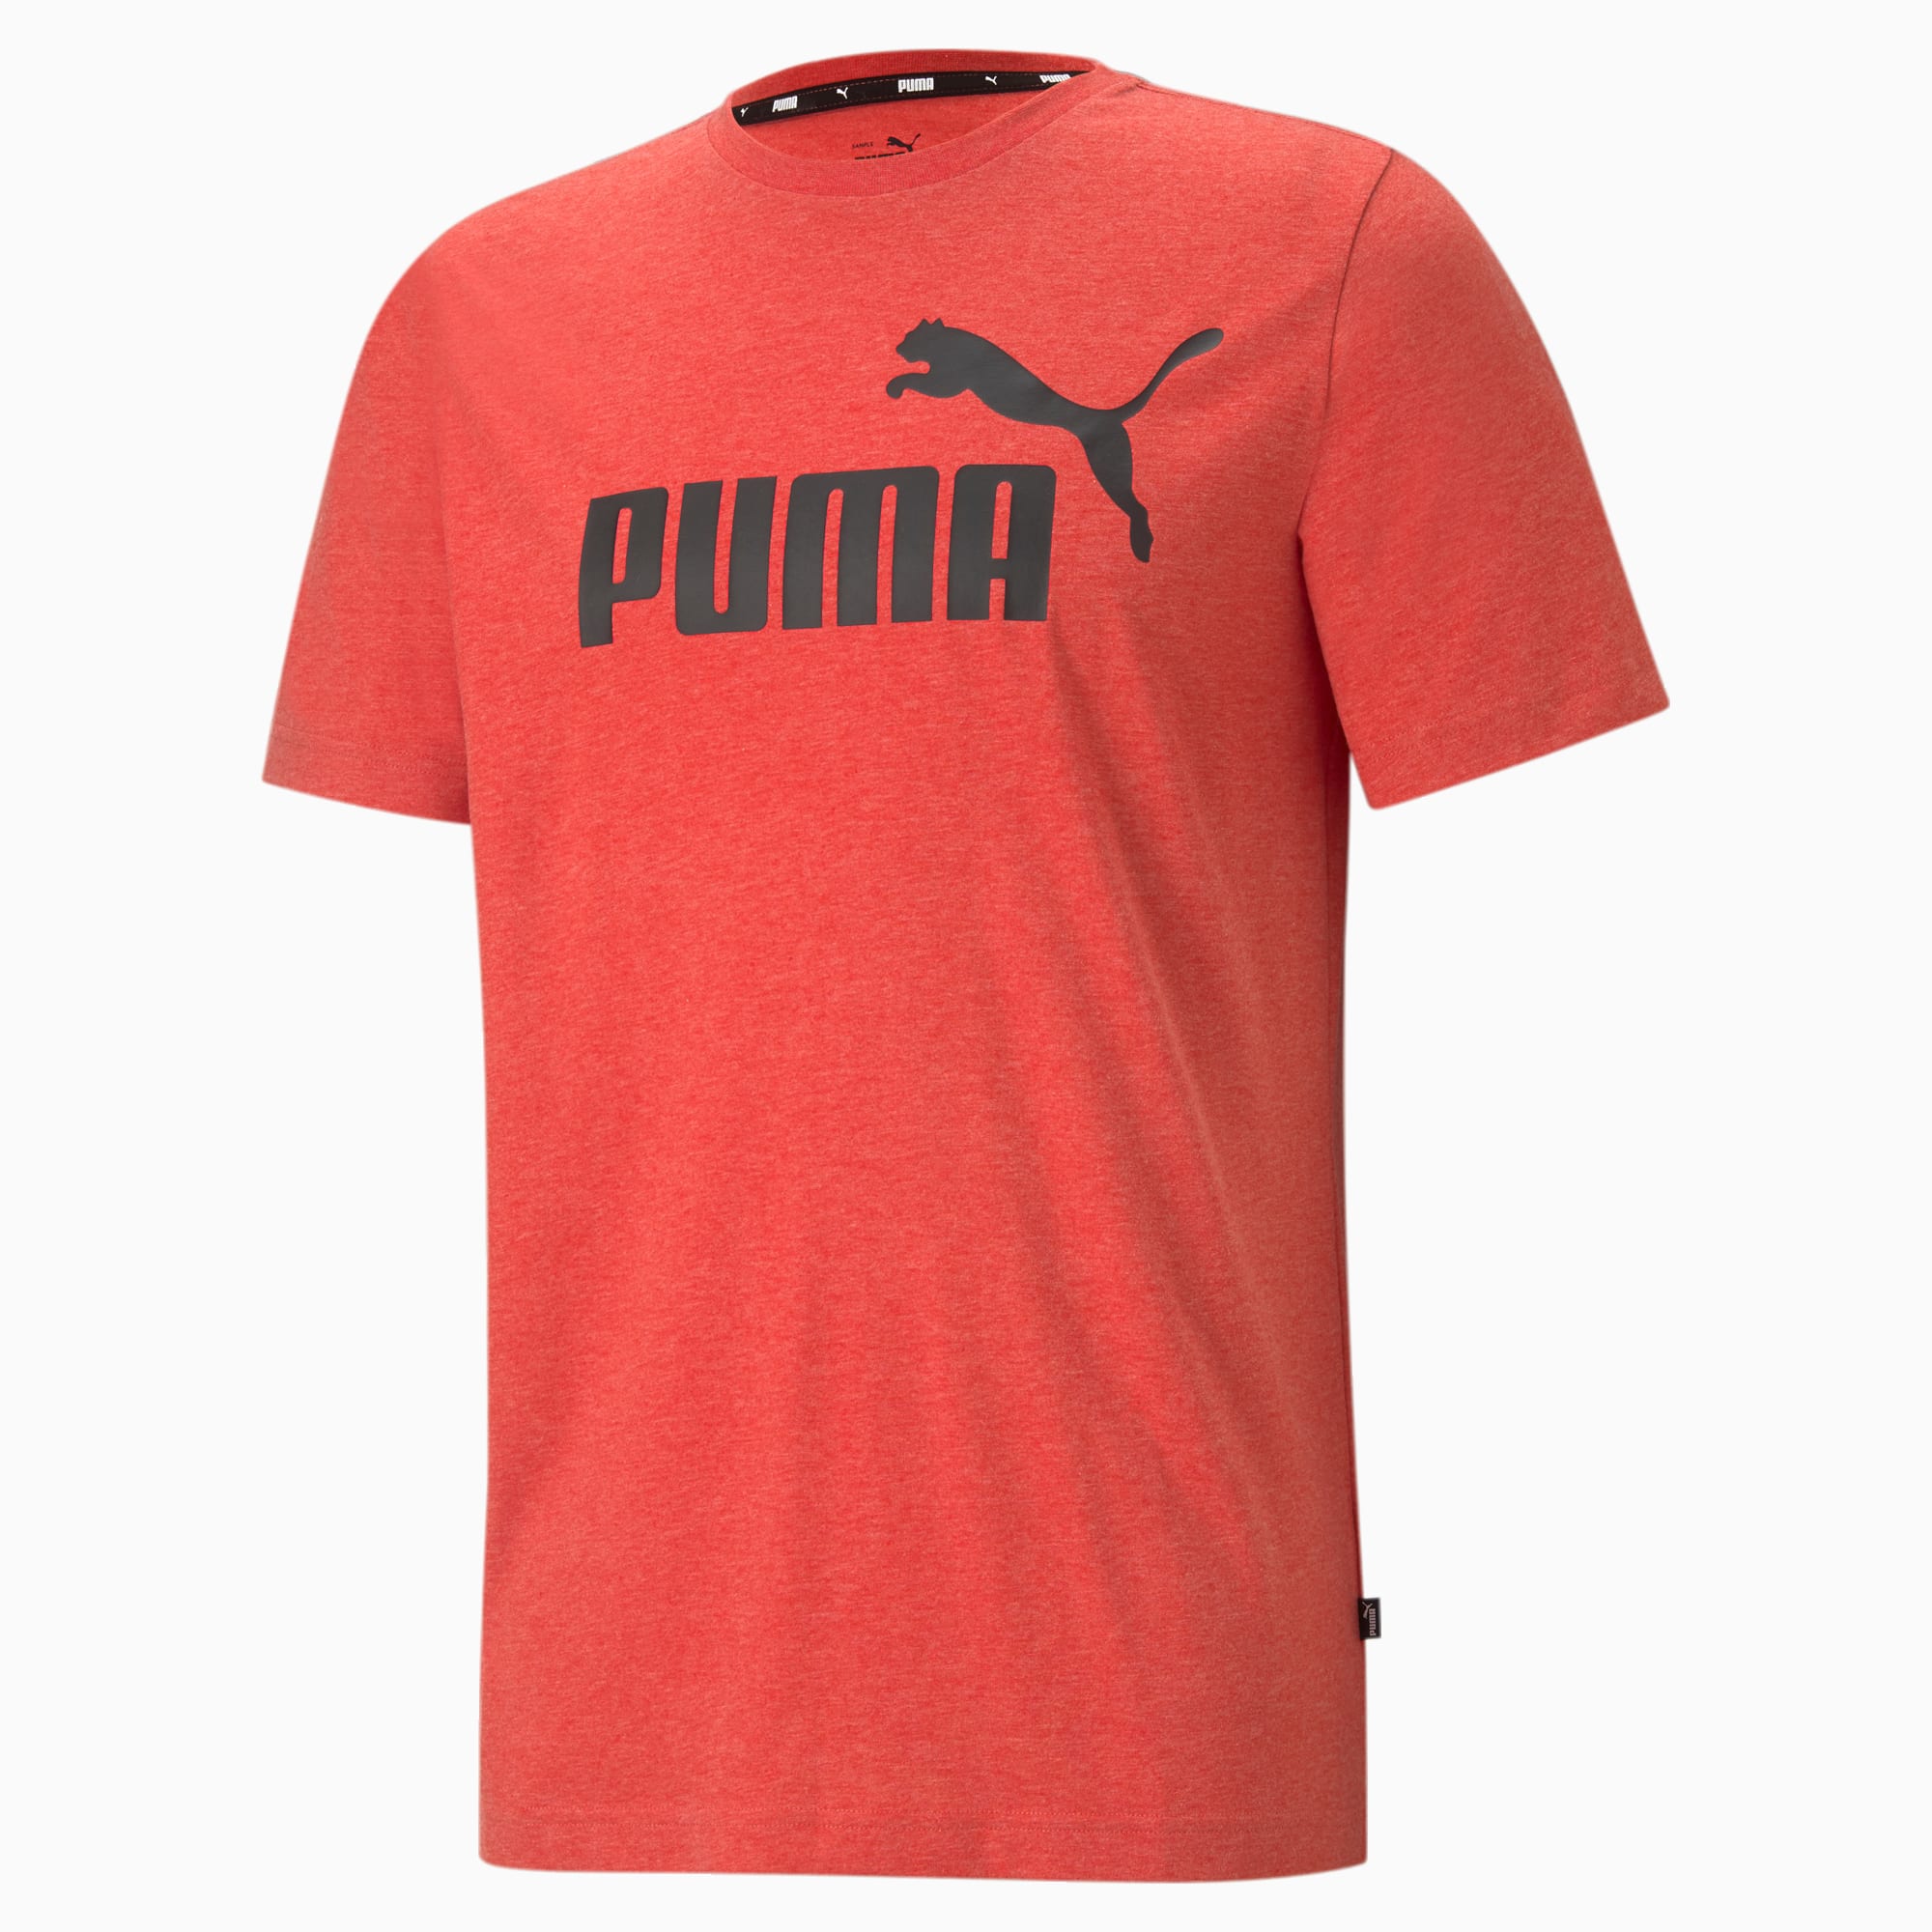 PUMA Essentials Heather Men's T-Shirt, High Risk Red, Size XXL, Clothing